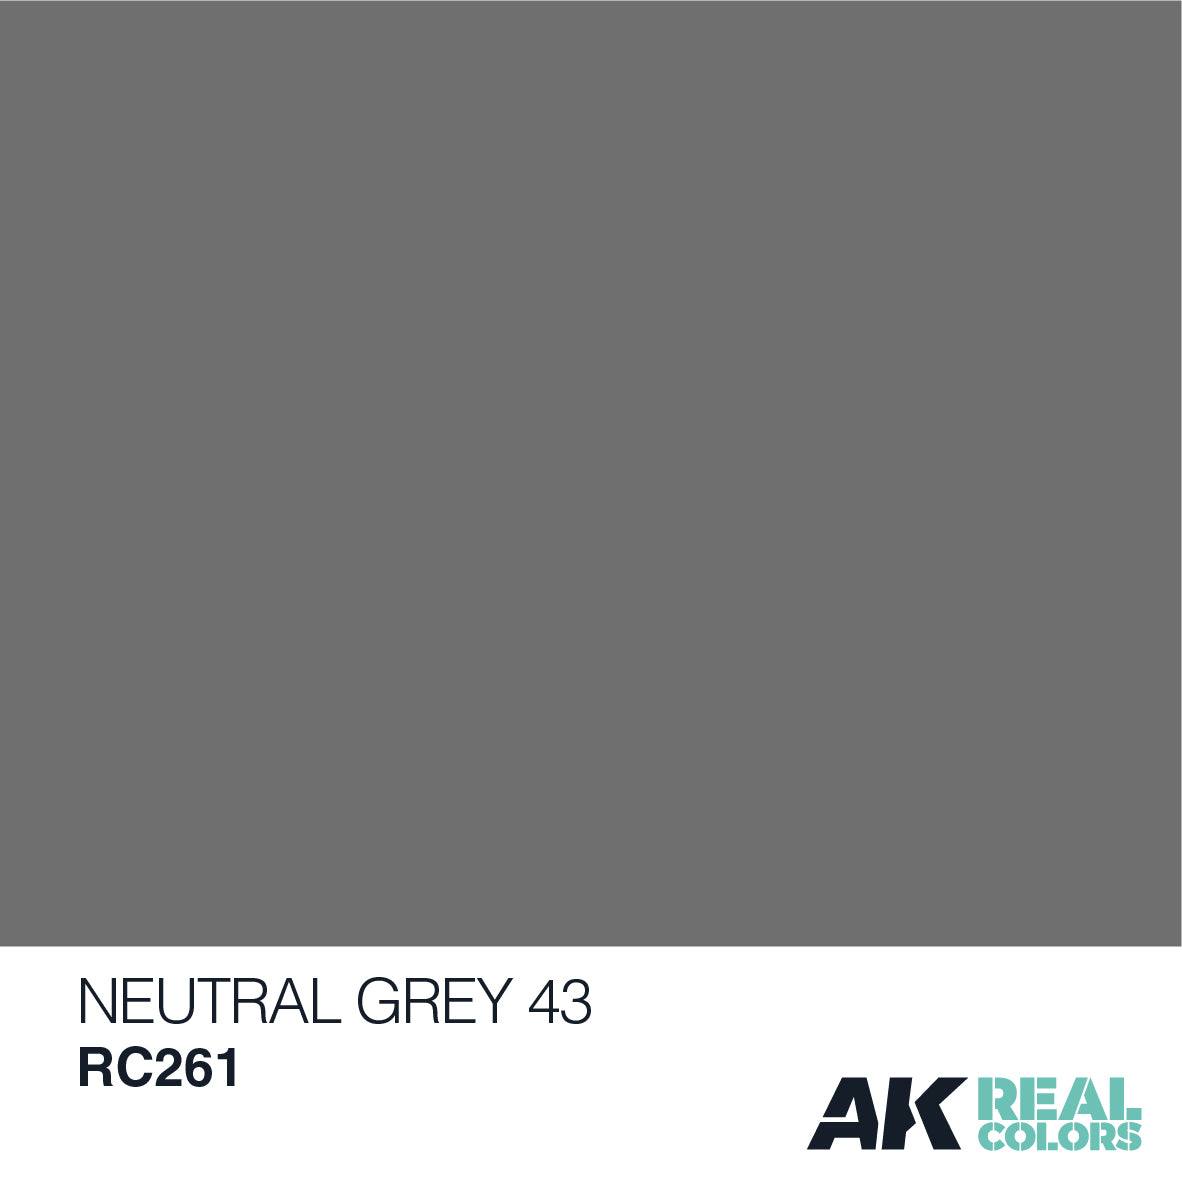 Neutral Grey 43 10ml - Loaded Dice Barry Vale of Glamorgan CF64 3HD